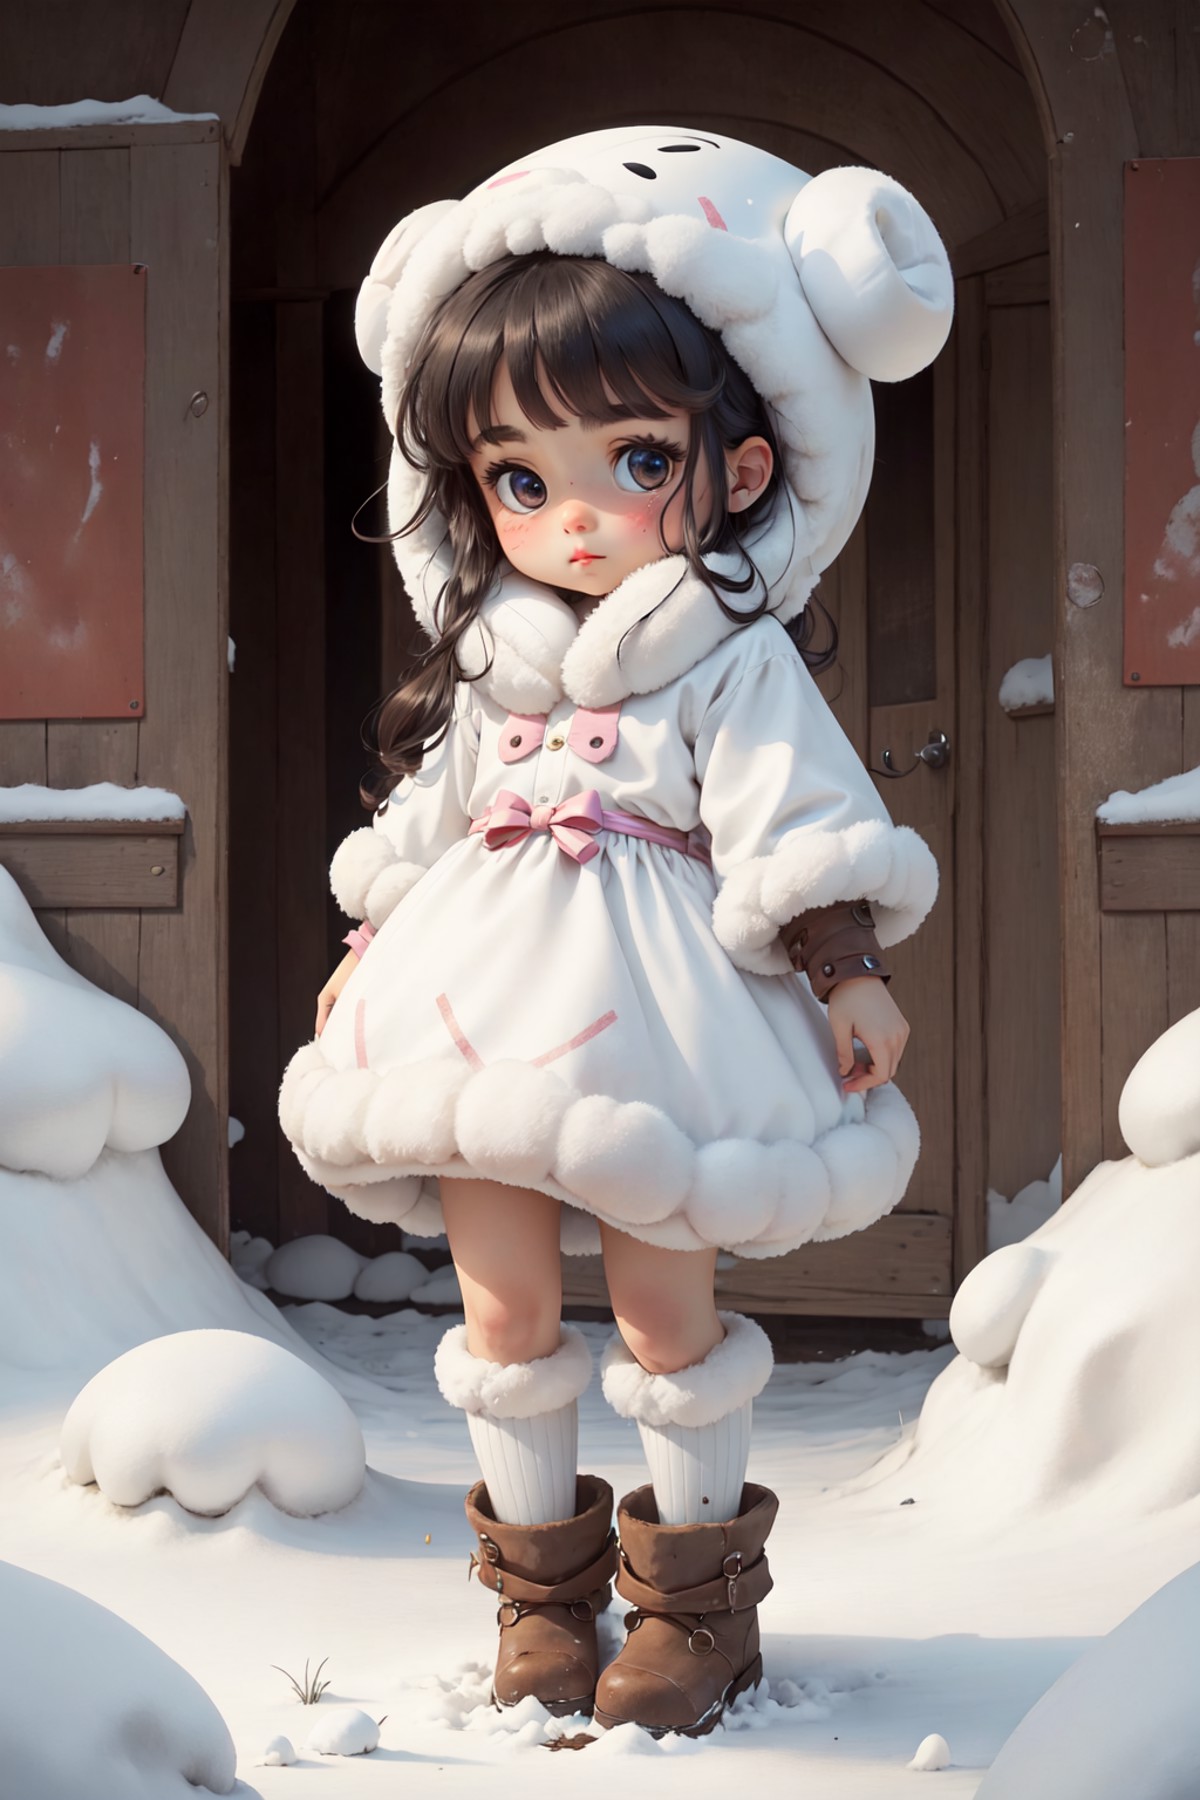 The girl who looks like marshmallow, <lora:Thumbelina:1>